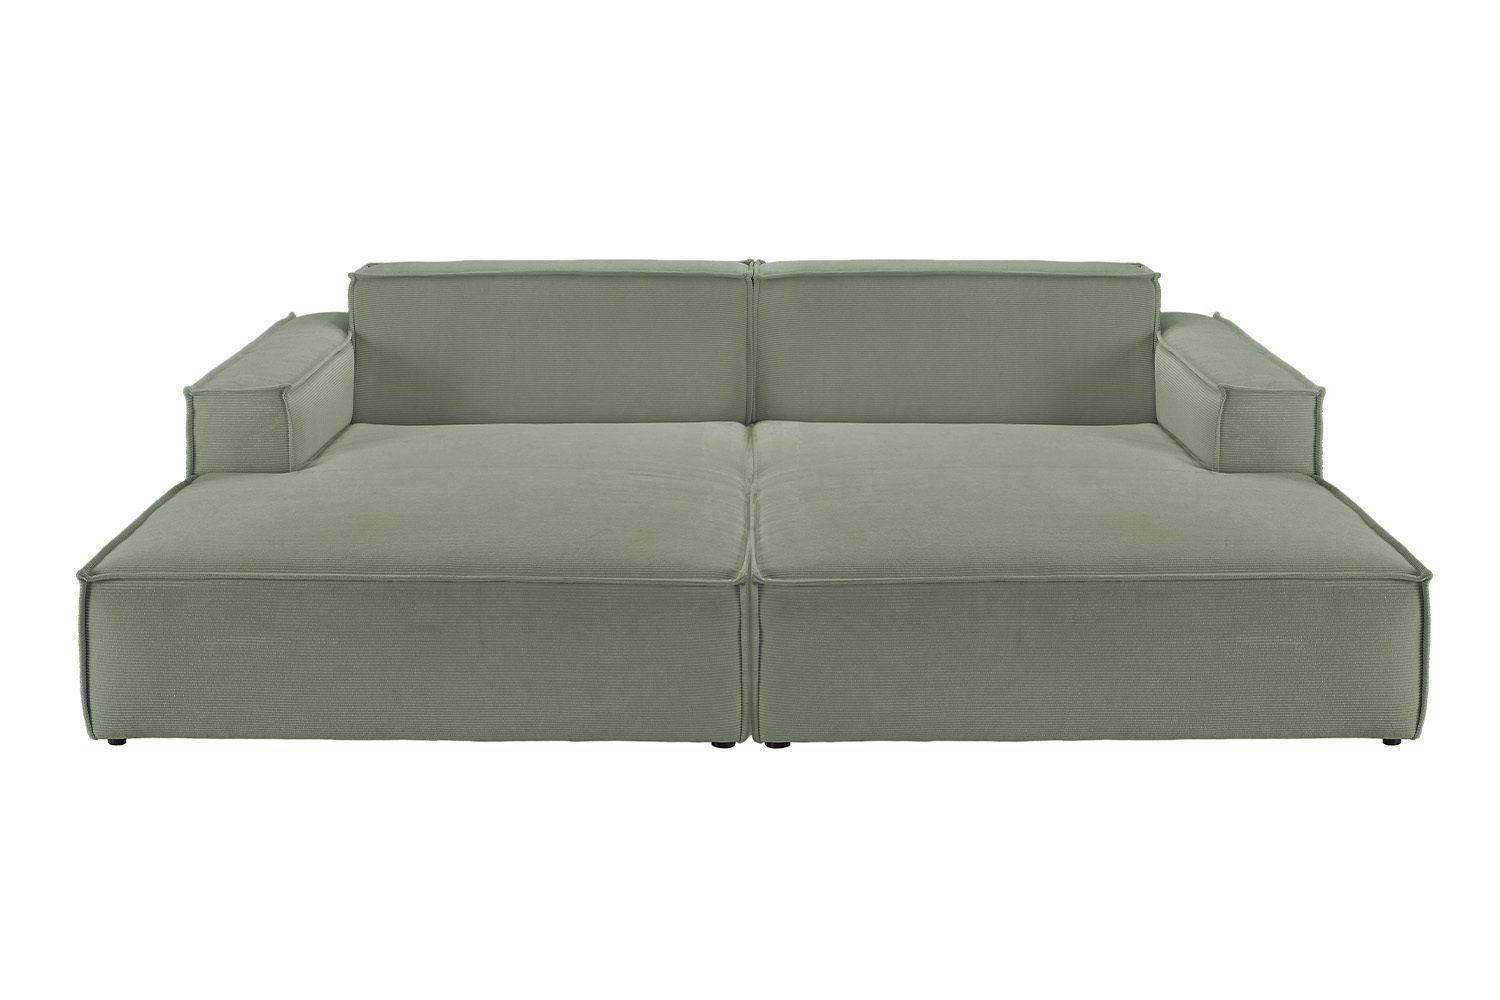 Farben SAMU, verschiedene olivgrün Big-Sofa Sofa KAWOLA Feincord